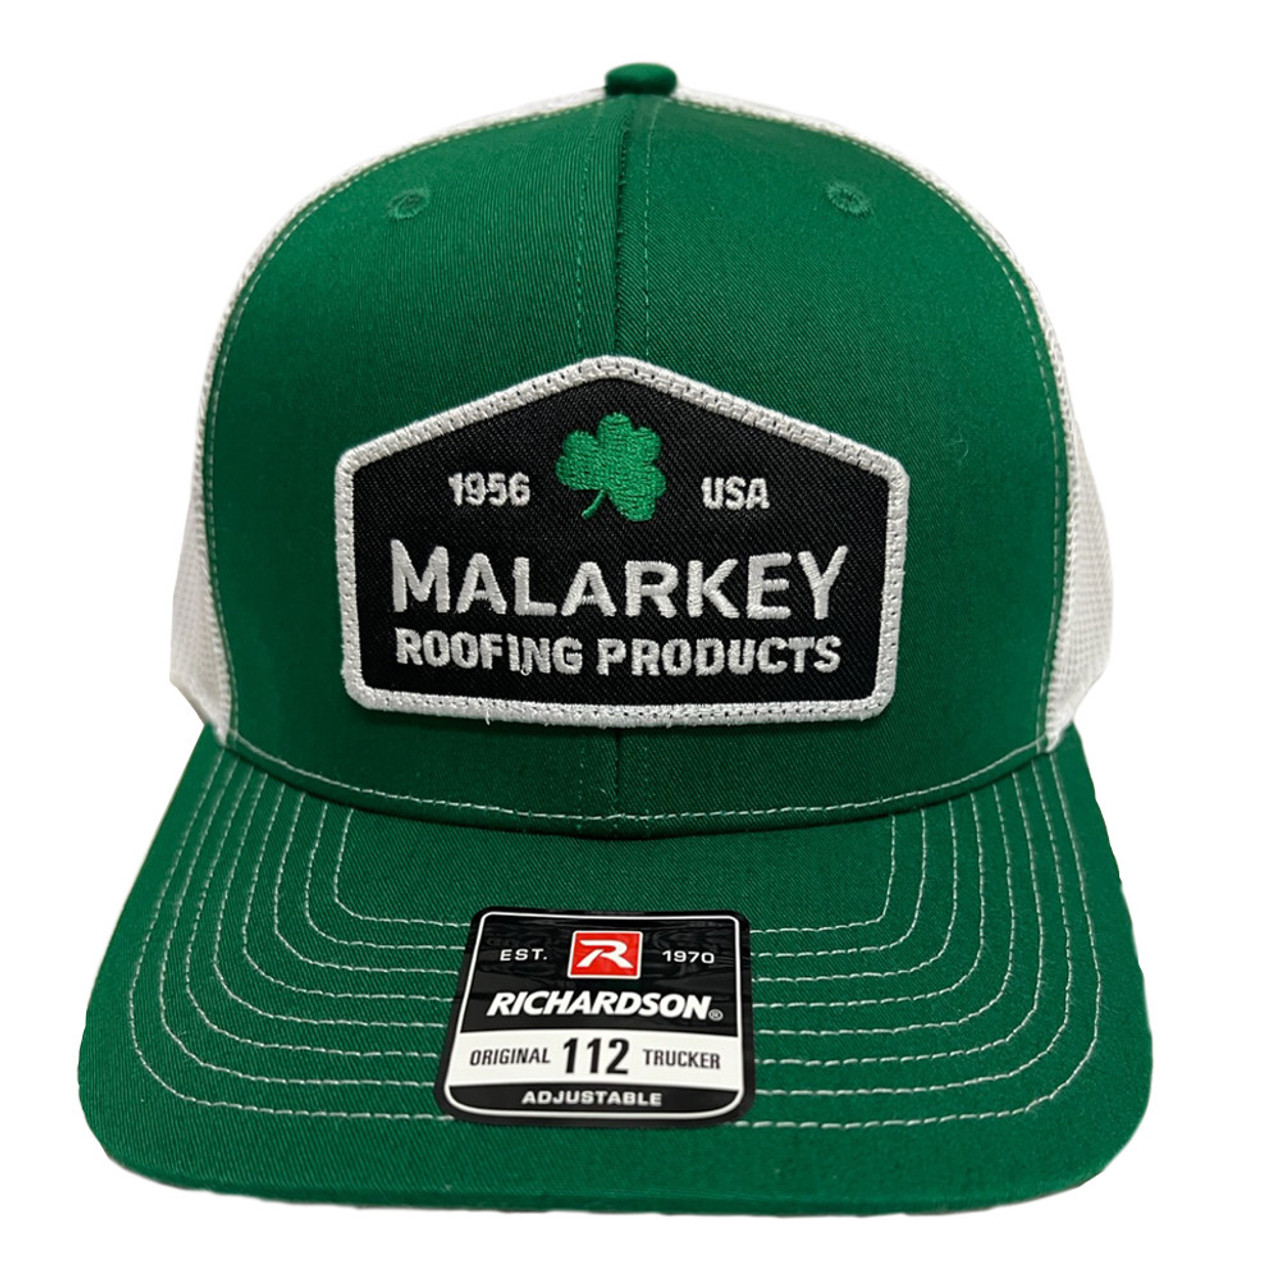 Mryumi Milw-aukee Bu-cks Mil- Trucker Hats Green One Size Adjustable Snapback Hat, Women's